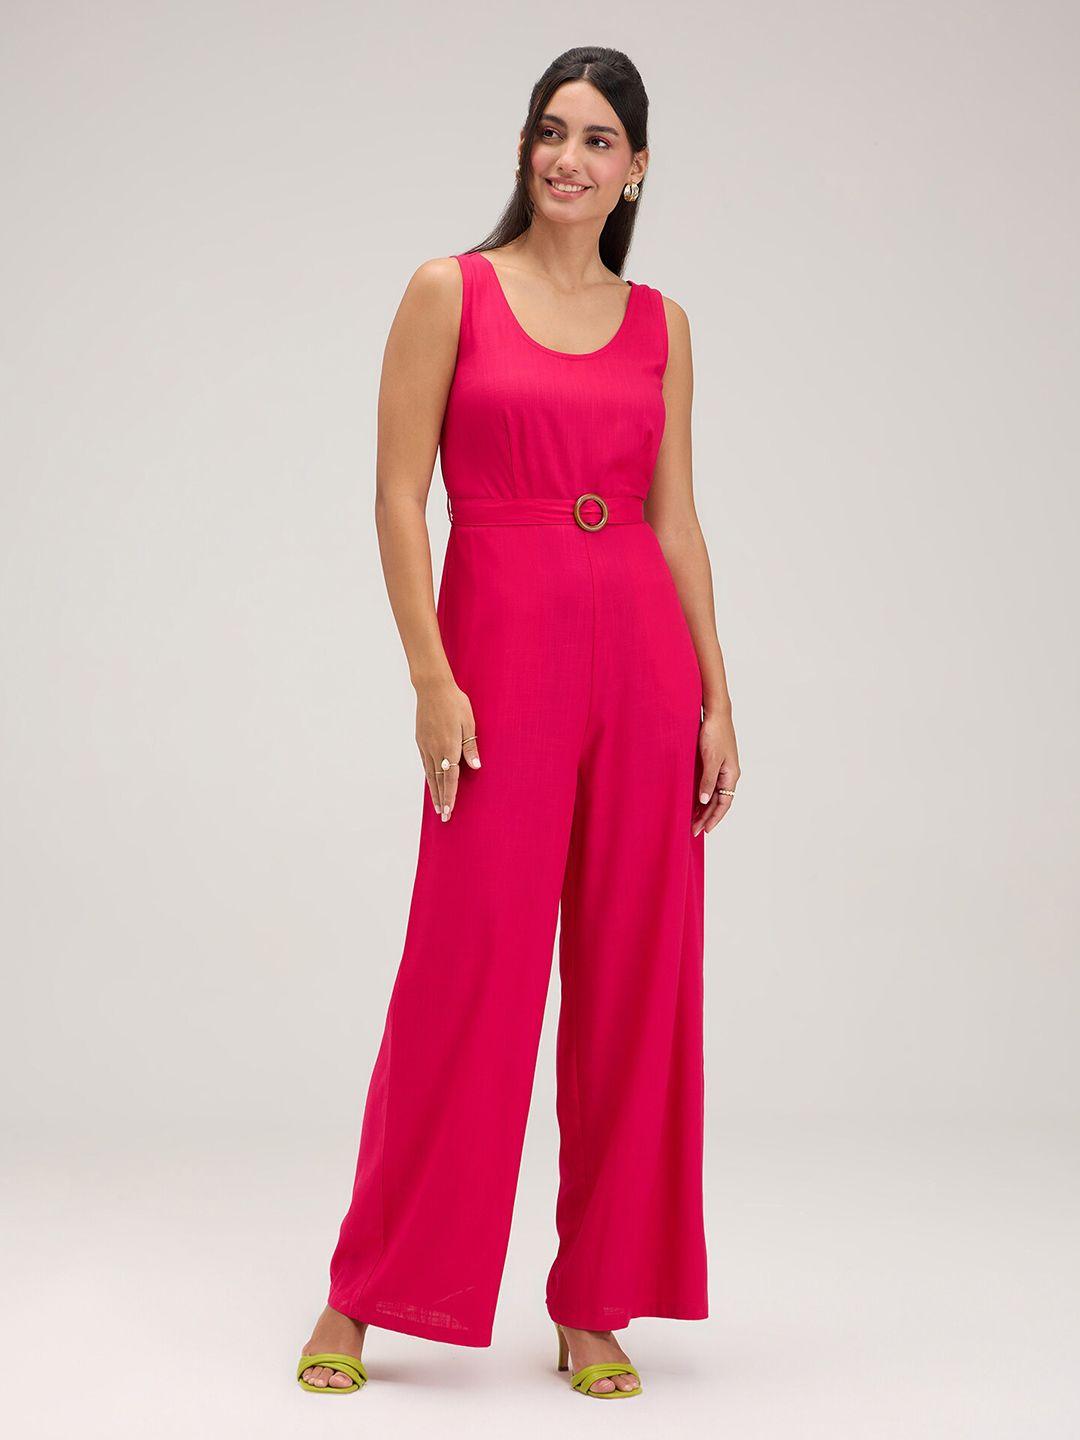 20dresses pink sleeveless basic jumpsuit